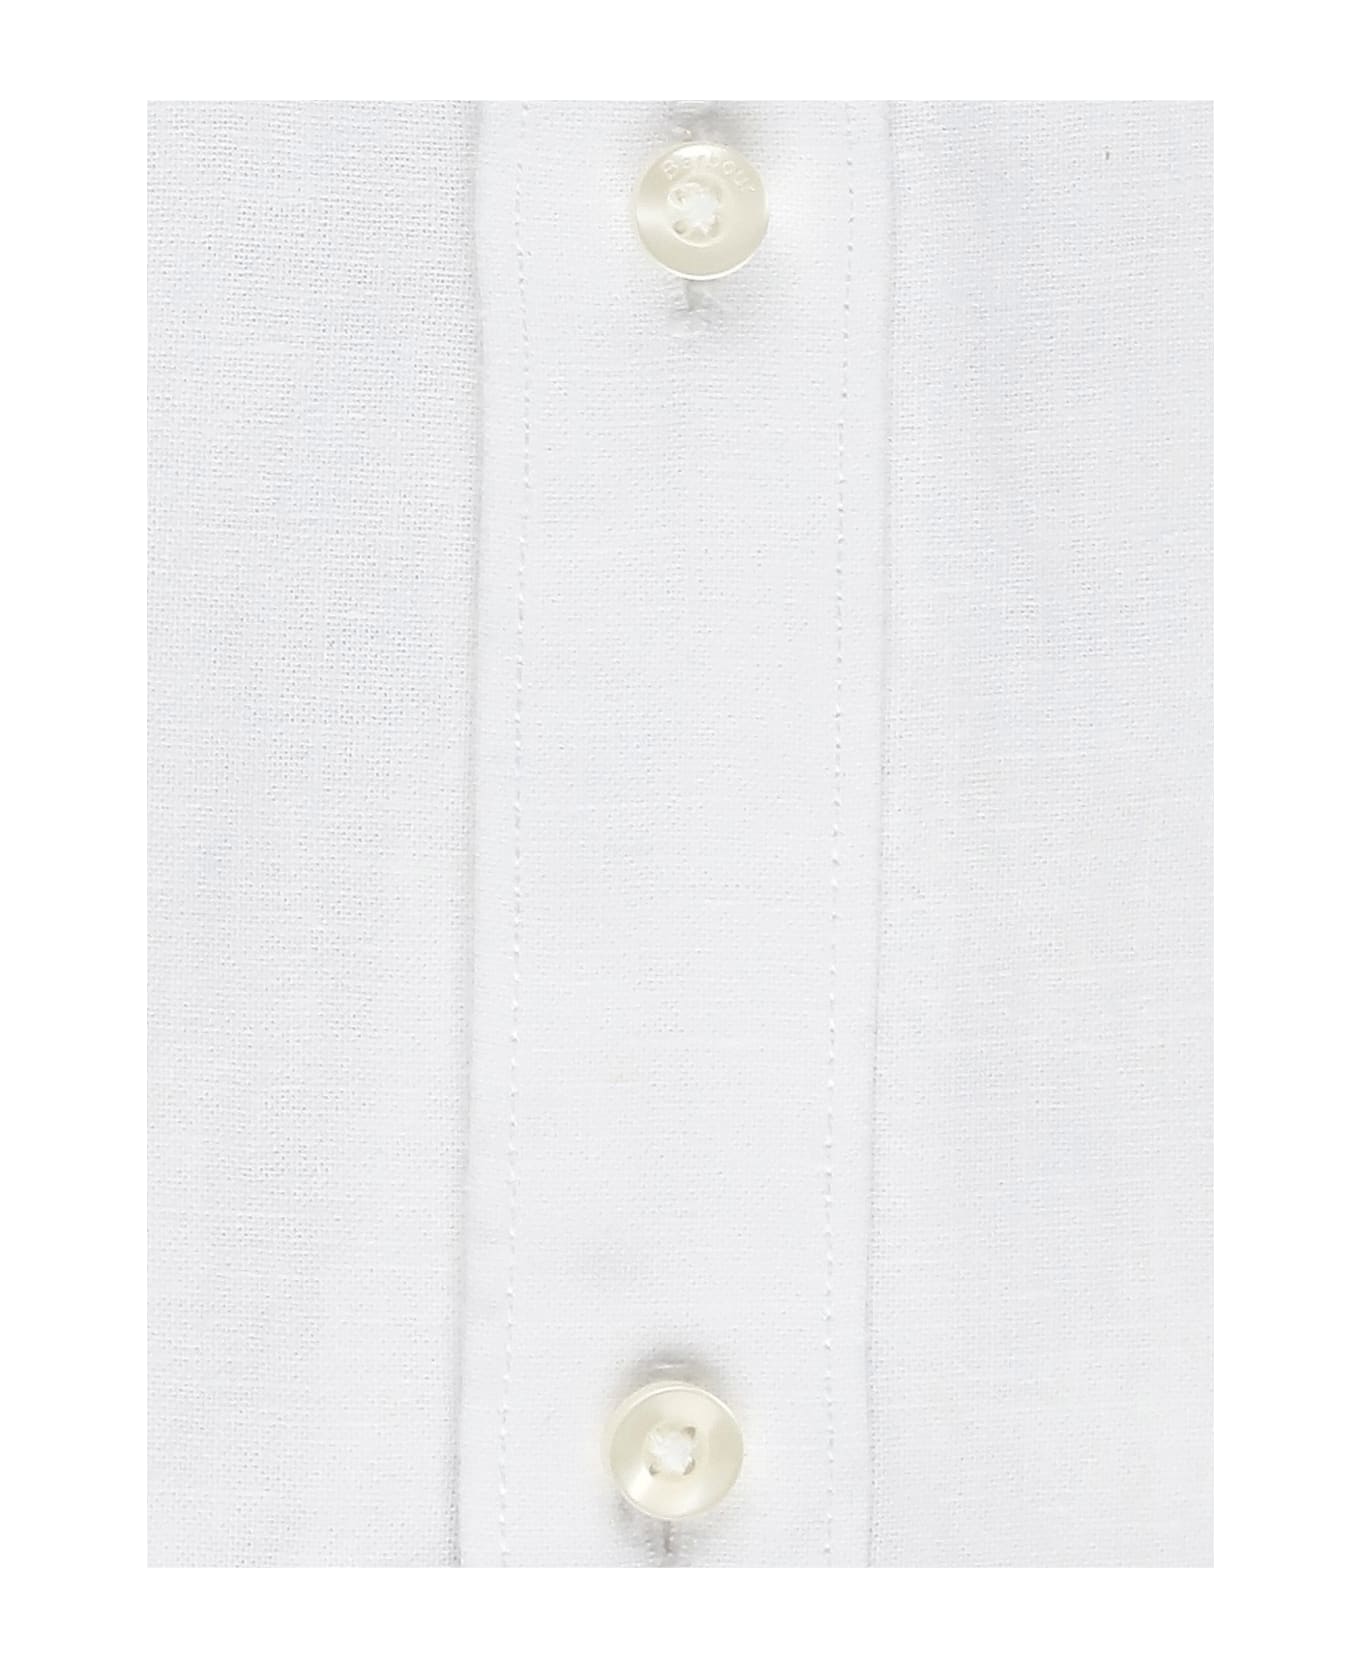 Barbour Nelson Shirt - White